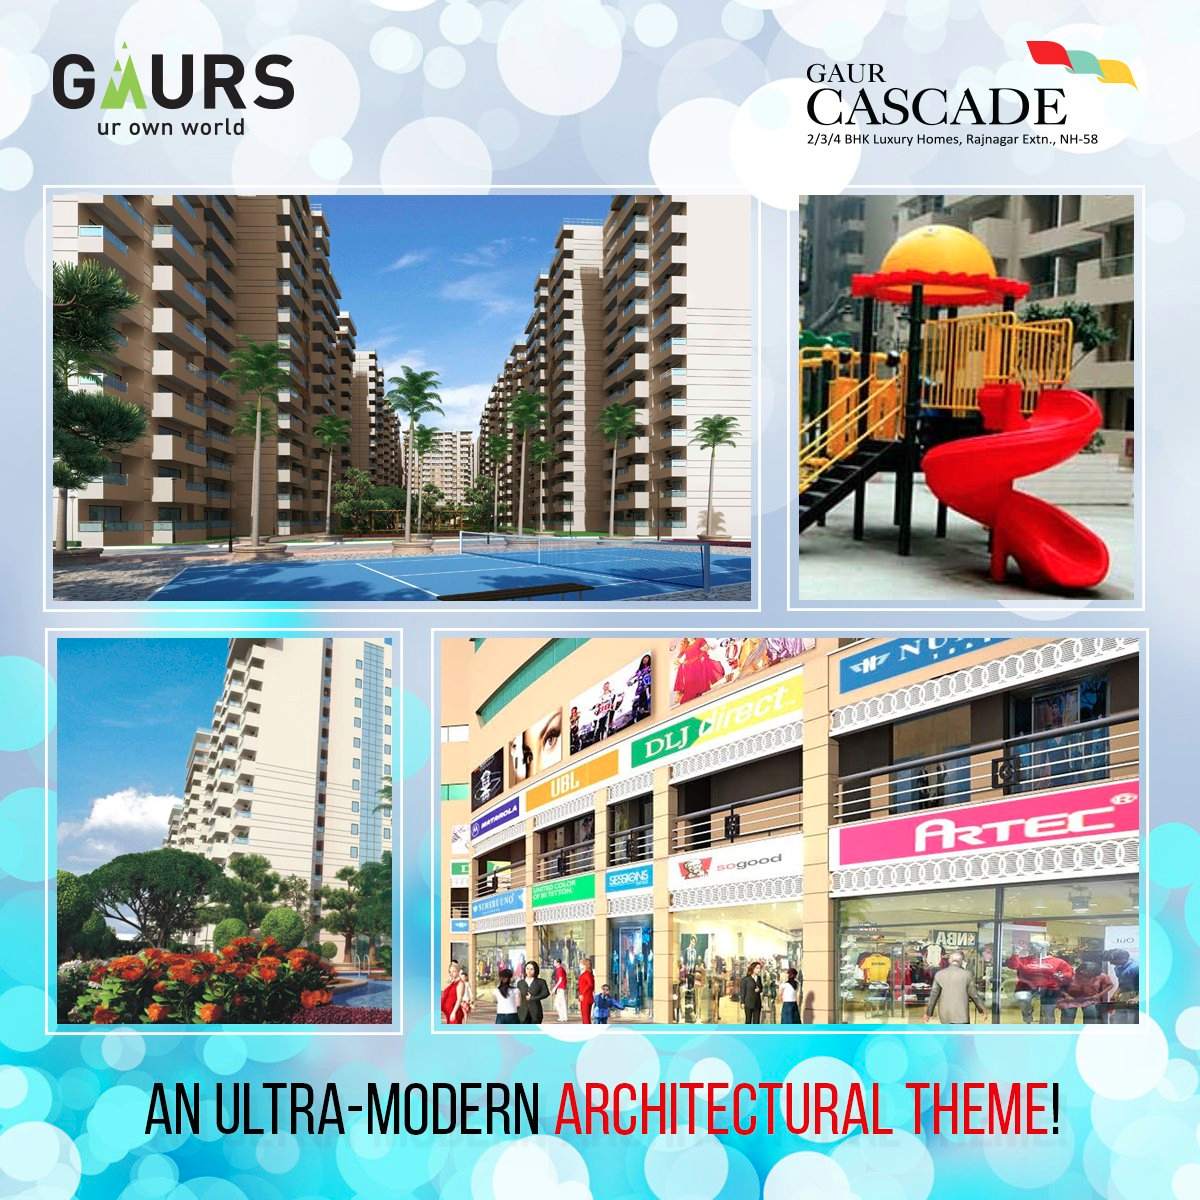 An ultra - moden architectural theme at Gaur Cascades